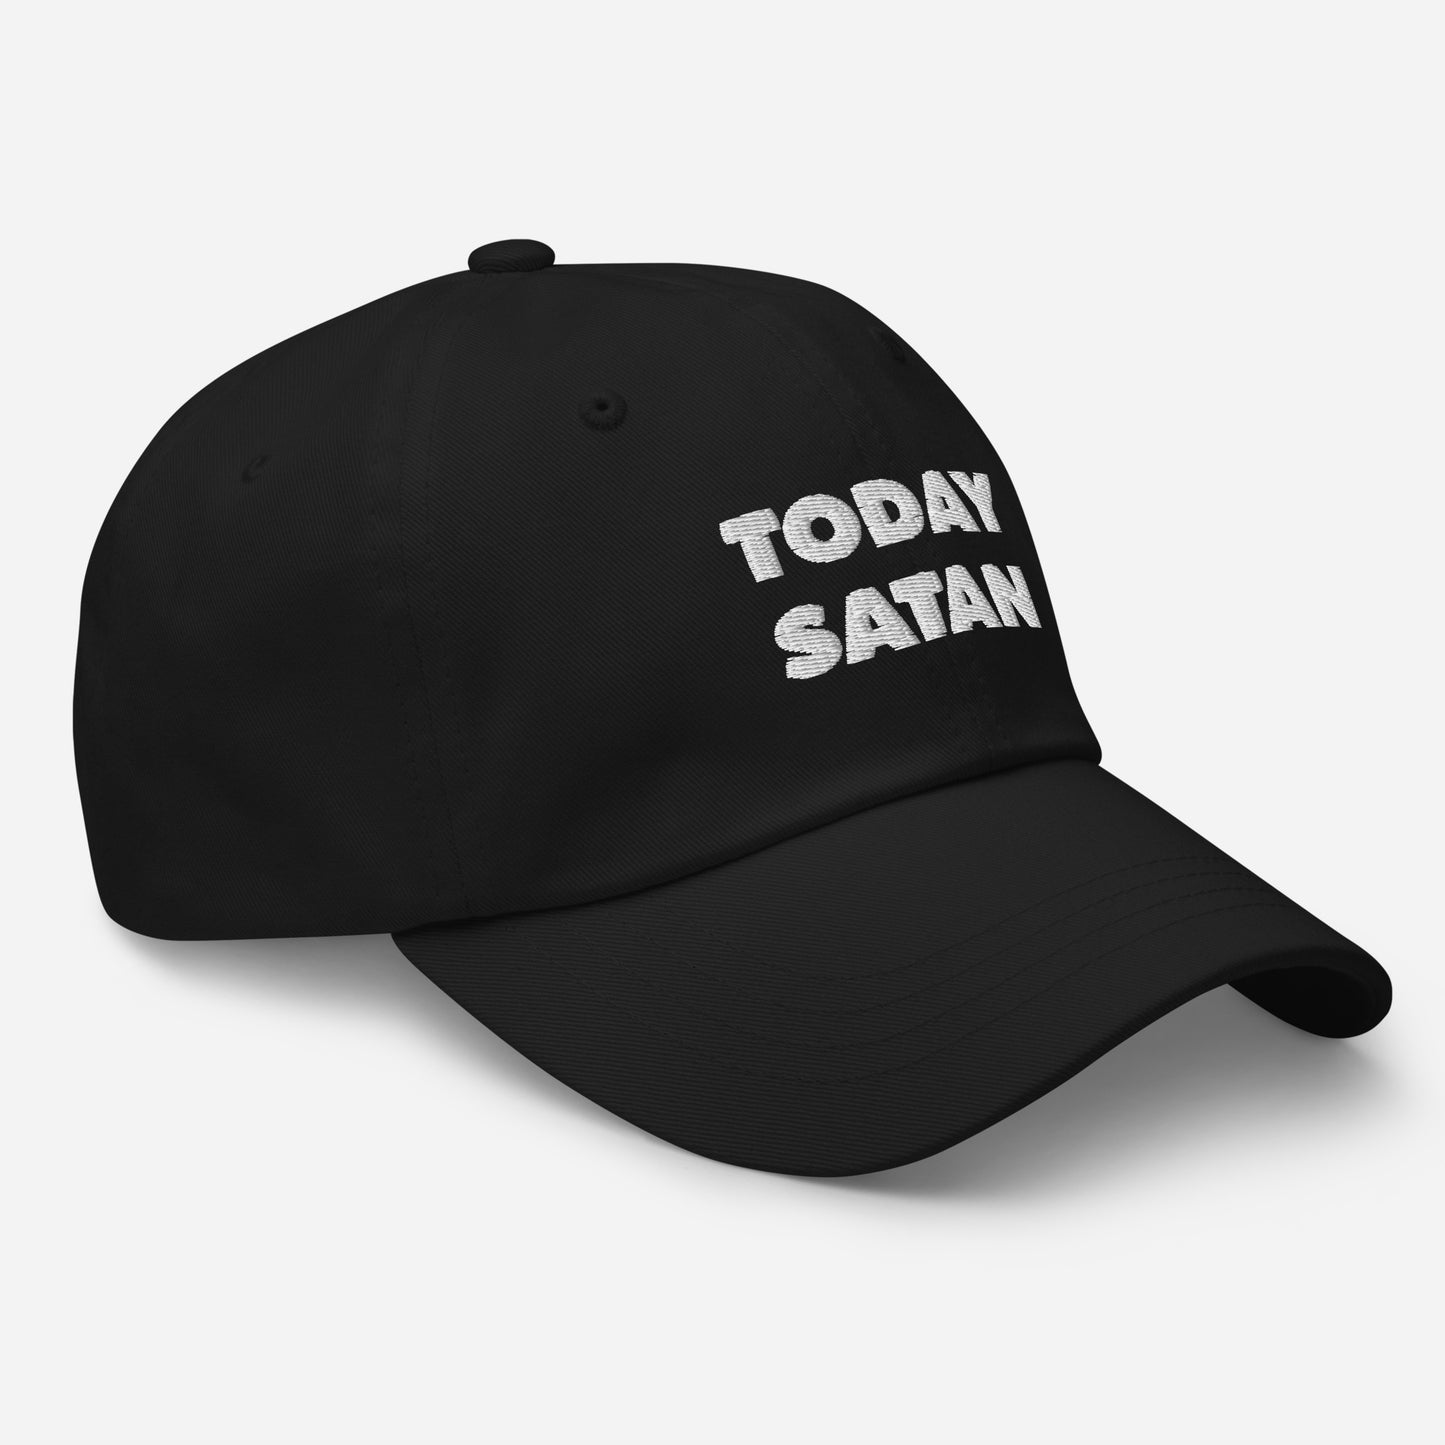 Today Satan Hat.